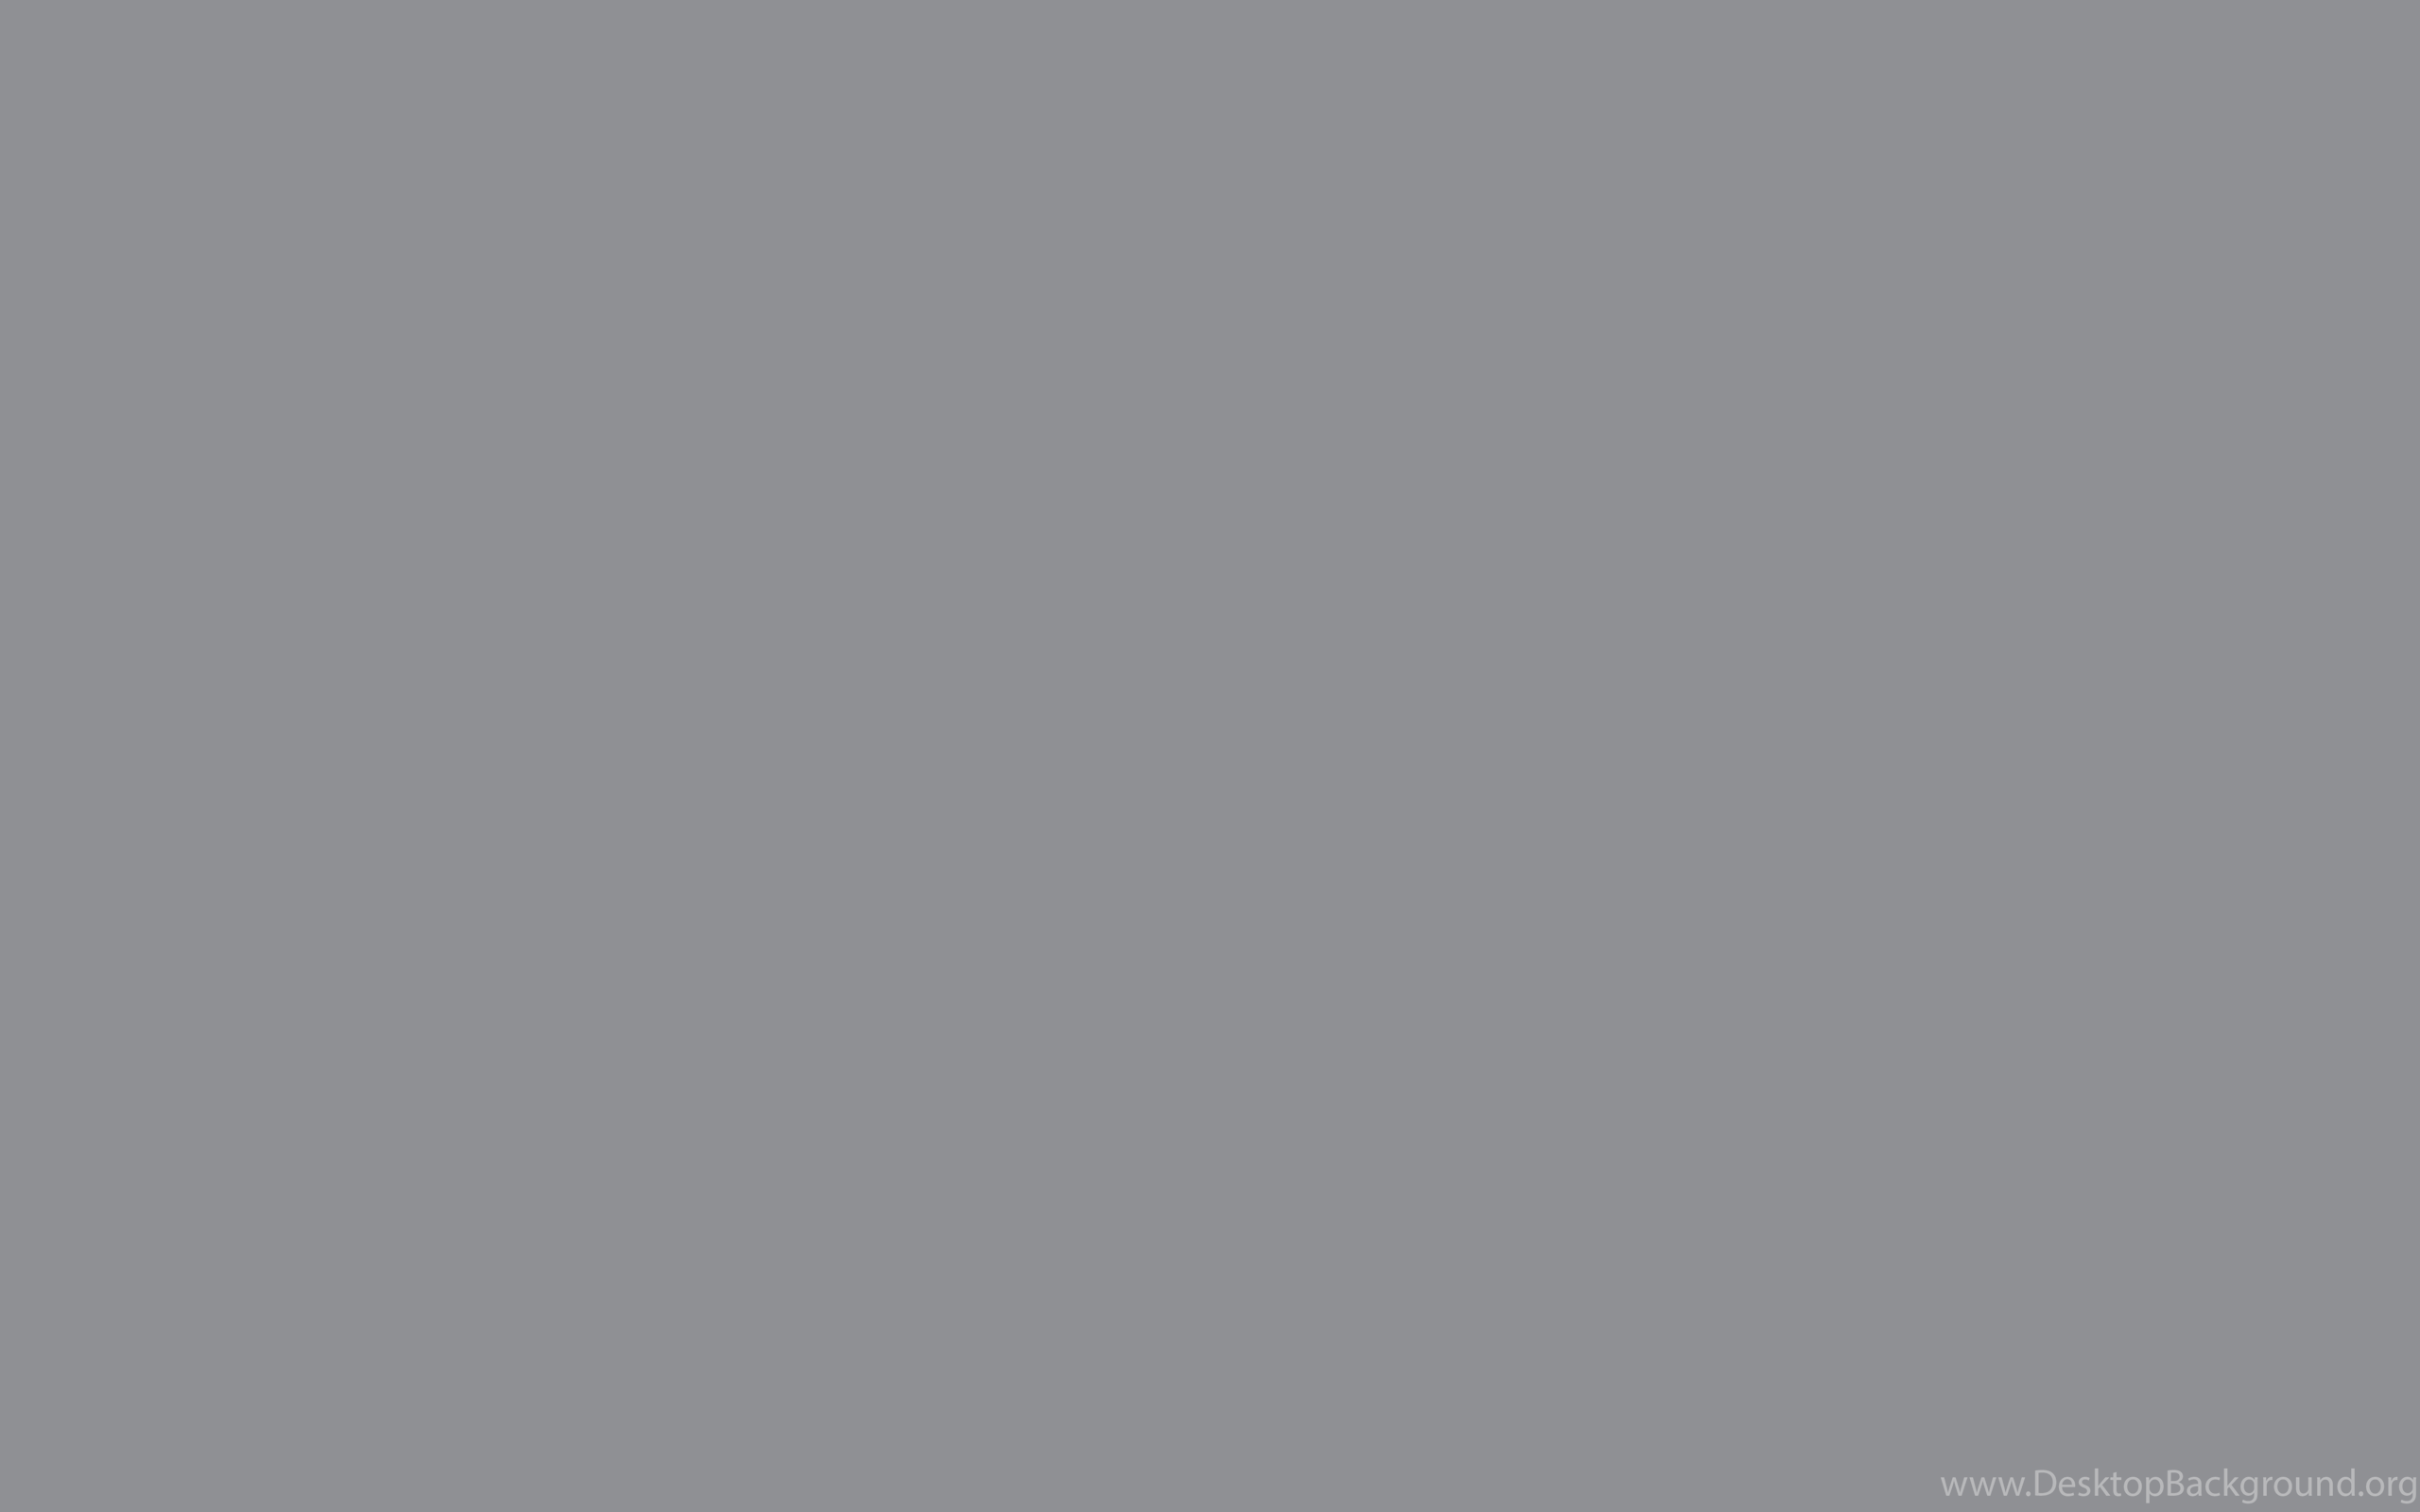 Solid Gray Wallpaper 1818 2560x1600 UMad.com Desktop Background